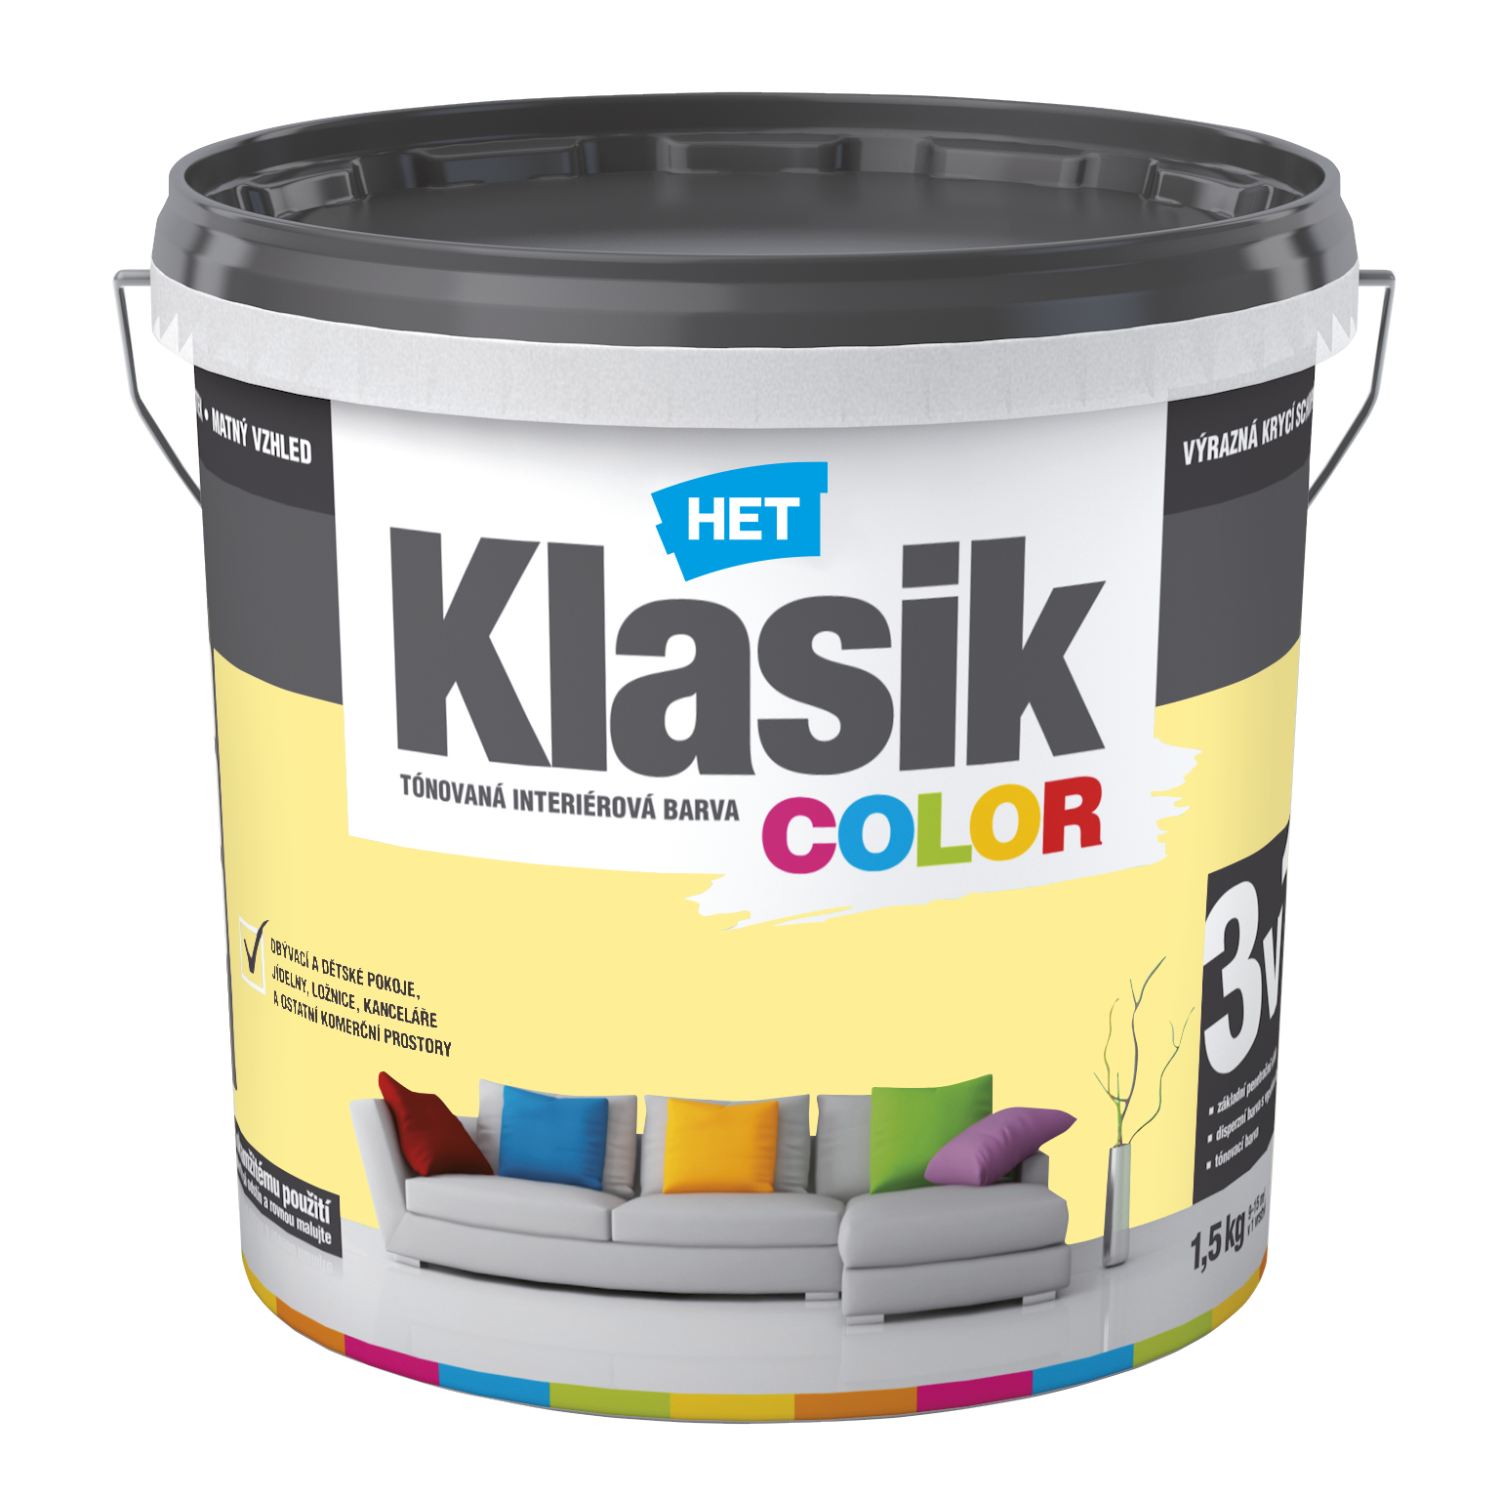 HET Klasik COLOR tónovaná interiérová akrylátová disperzná oteruvzdorná farba 1,5 kg, KC0597 - zelený limetkový